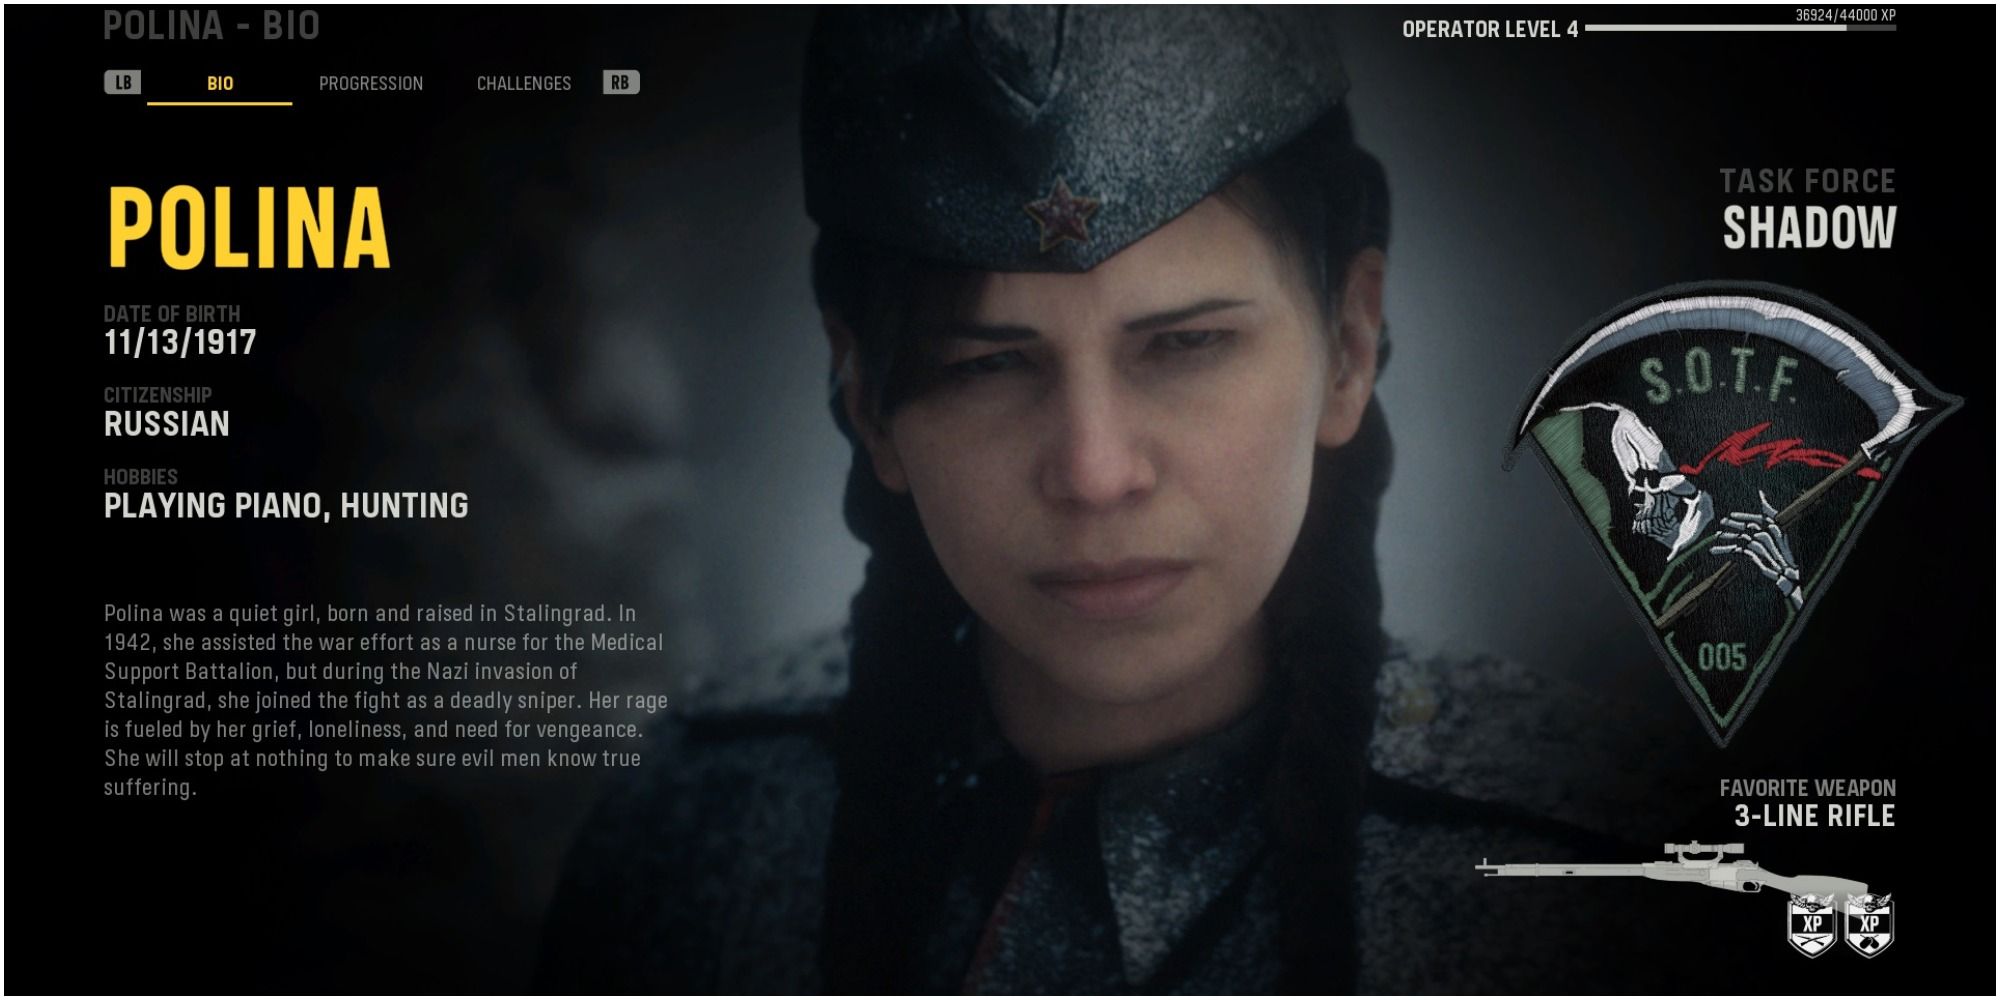 Call Of Duty Vanguard Polina's Bio Page In The Operator Menu